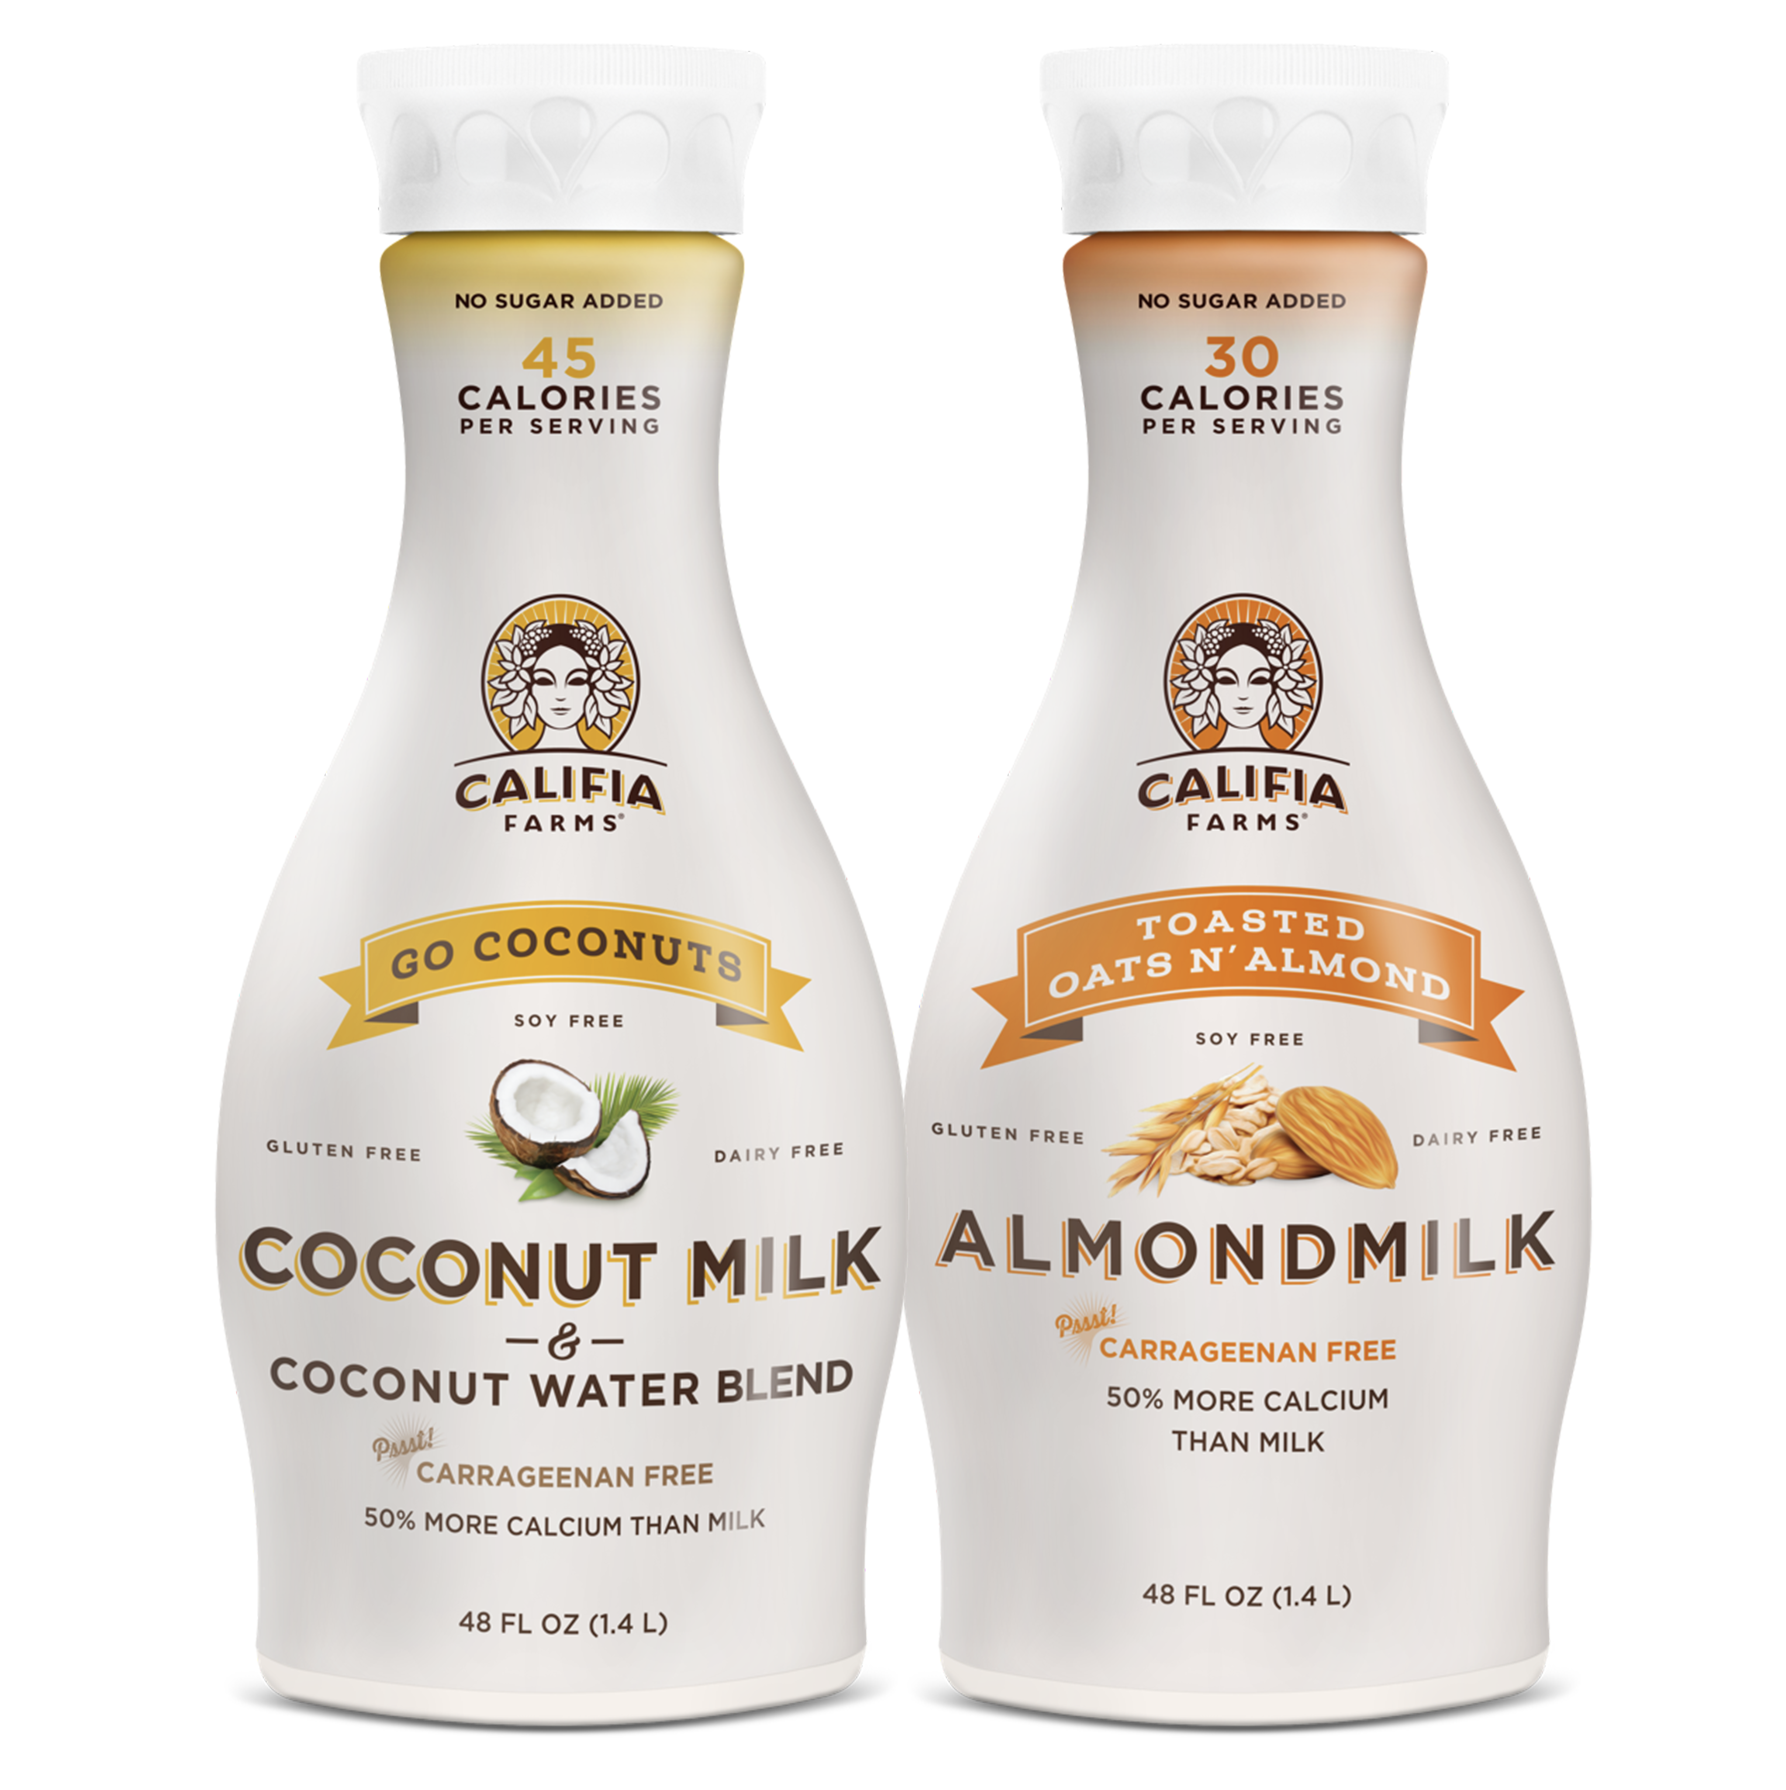 Califia Farms Go Coconuts and Toasted Oats ‘N Almond Almondmilk (48oz)